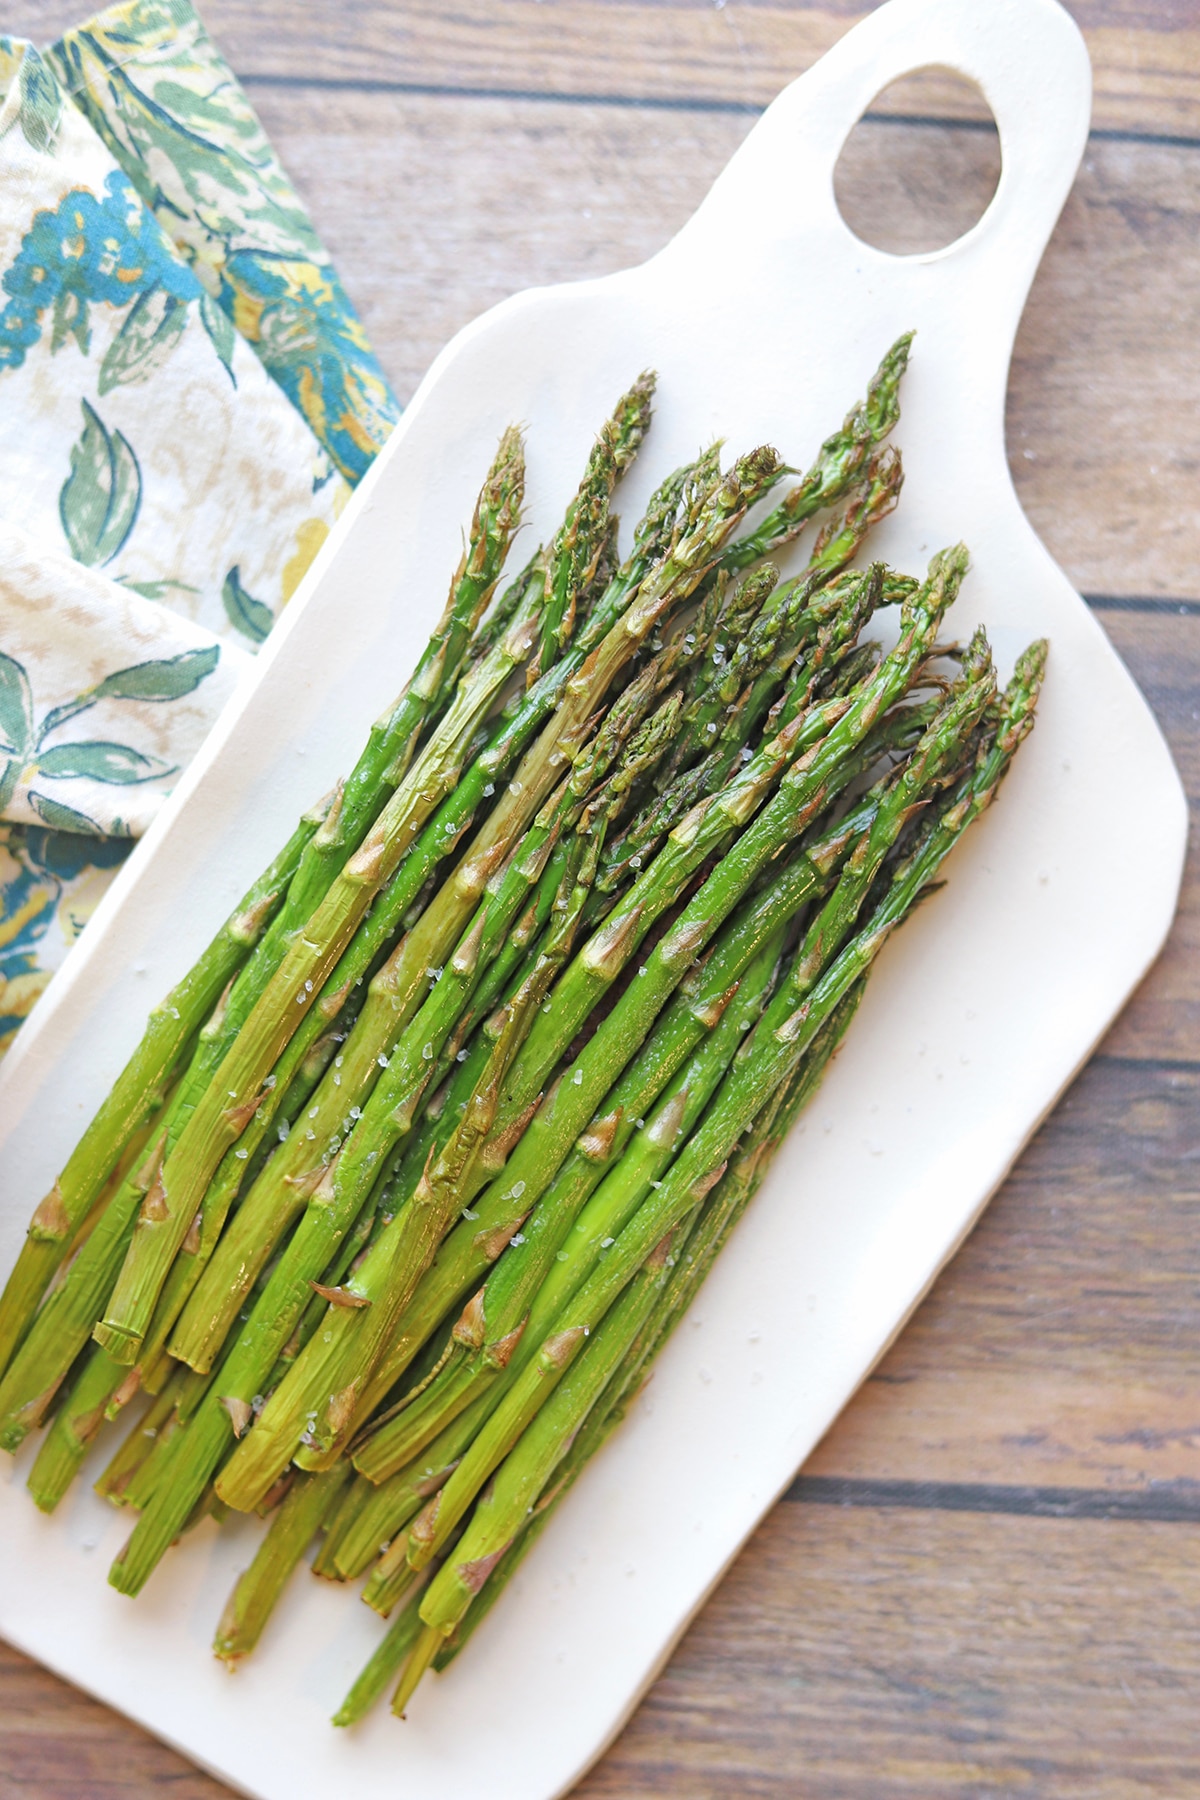 Pile of air fryer asparagus on platter.